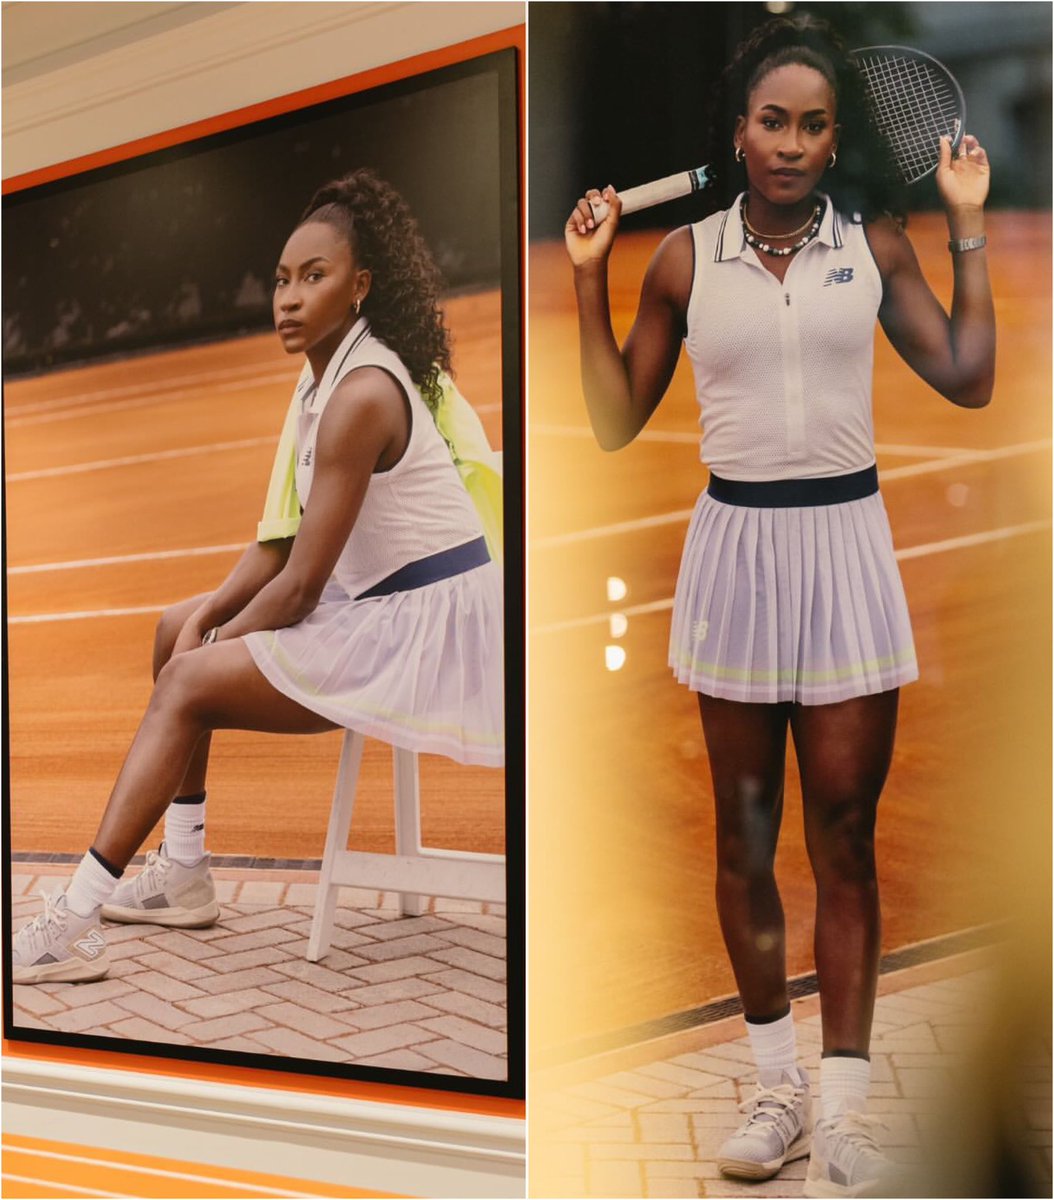 Coco’s Roland Garros kit?